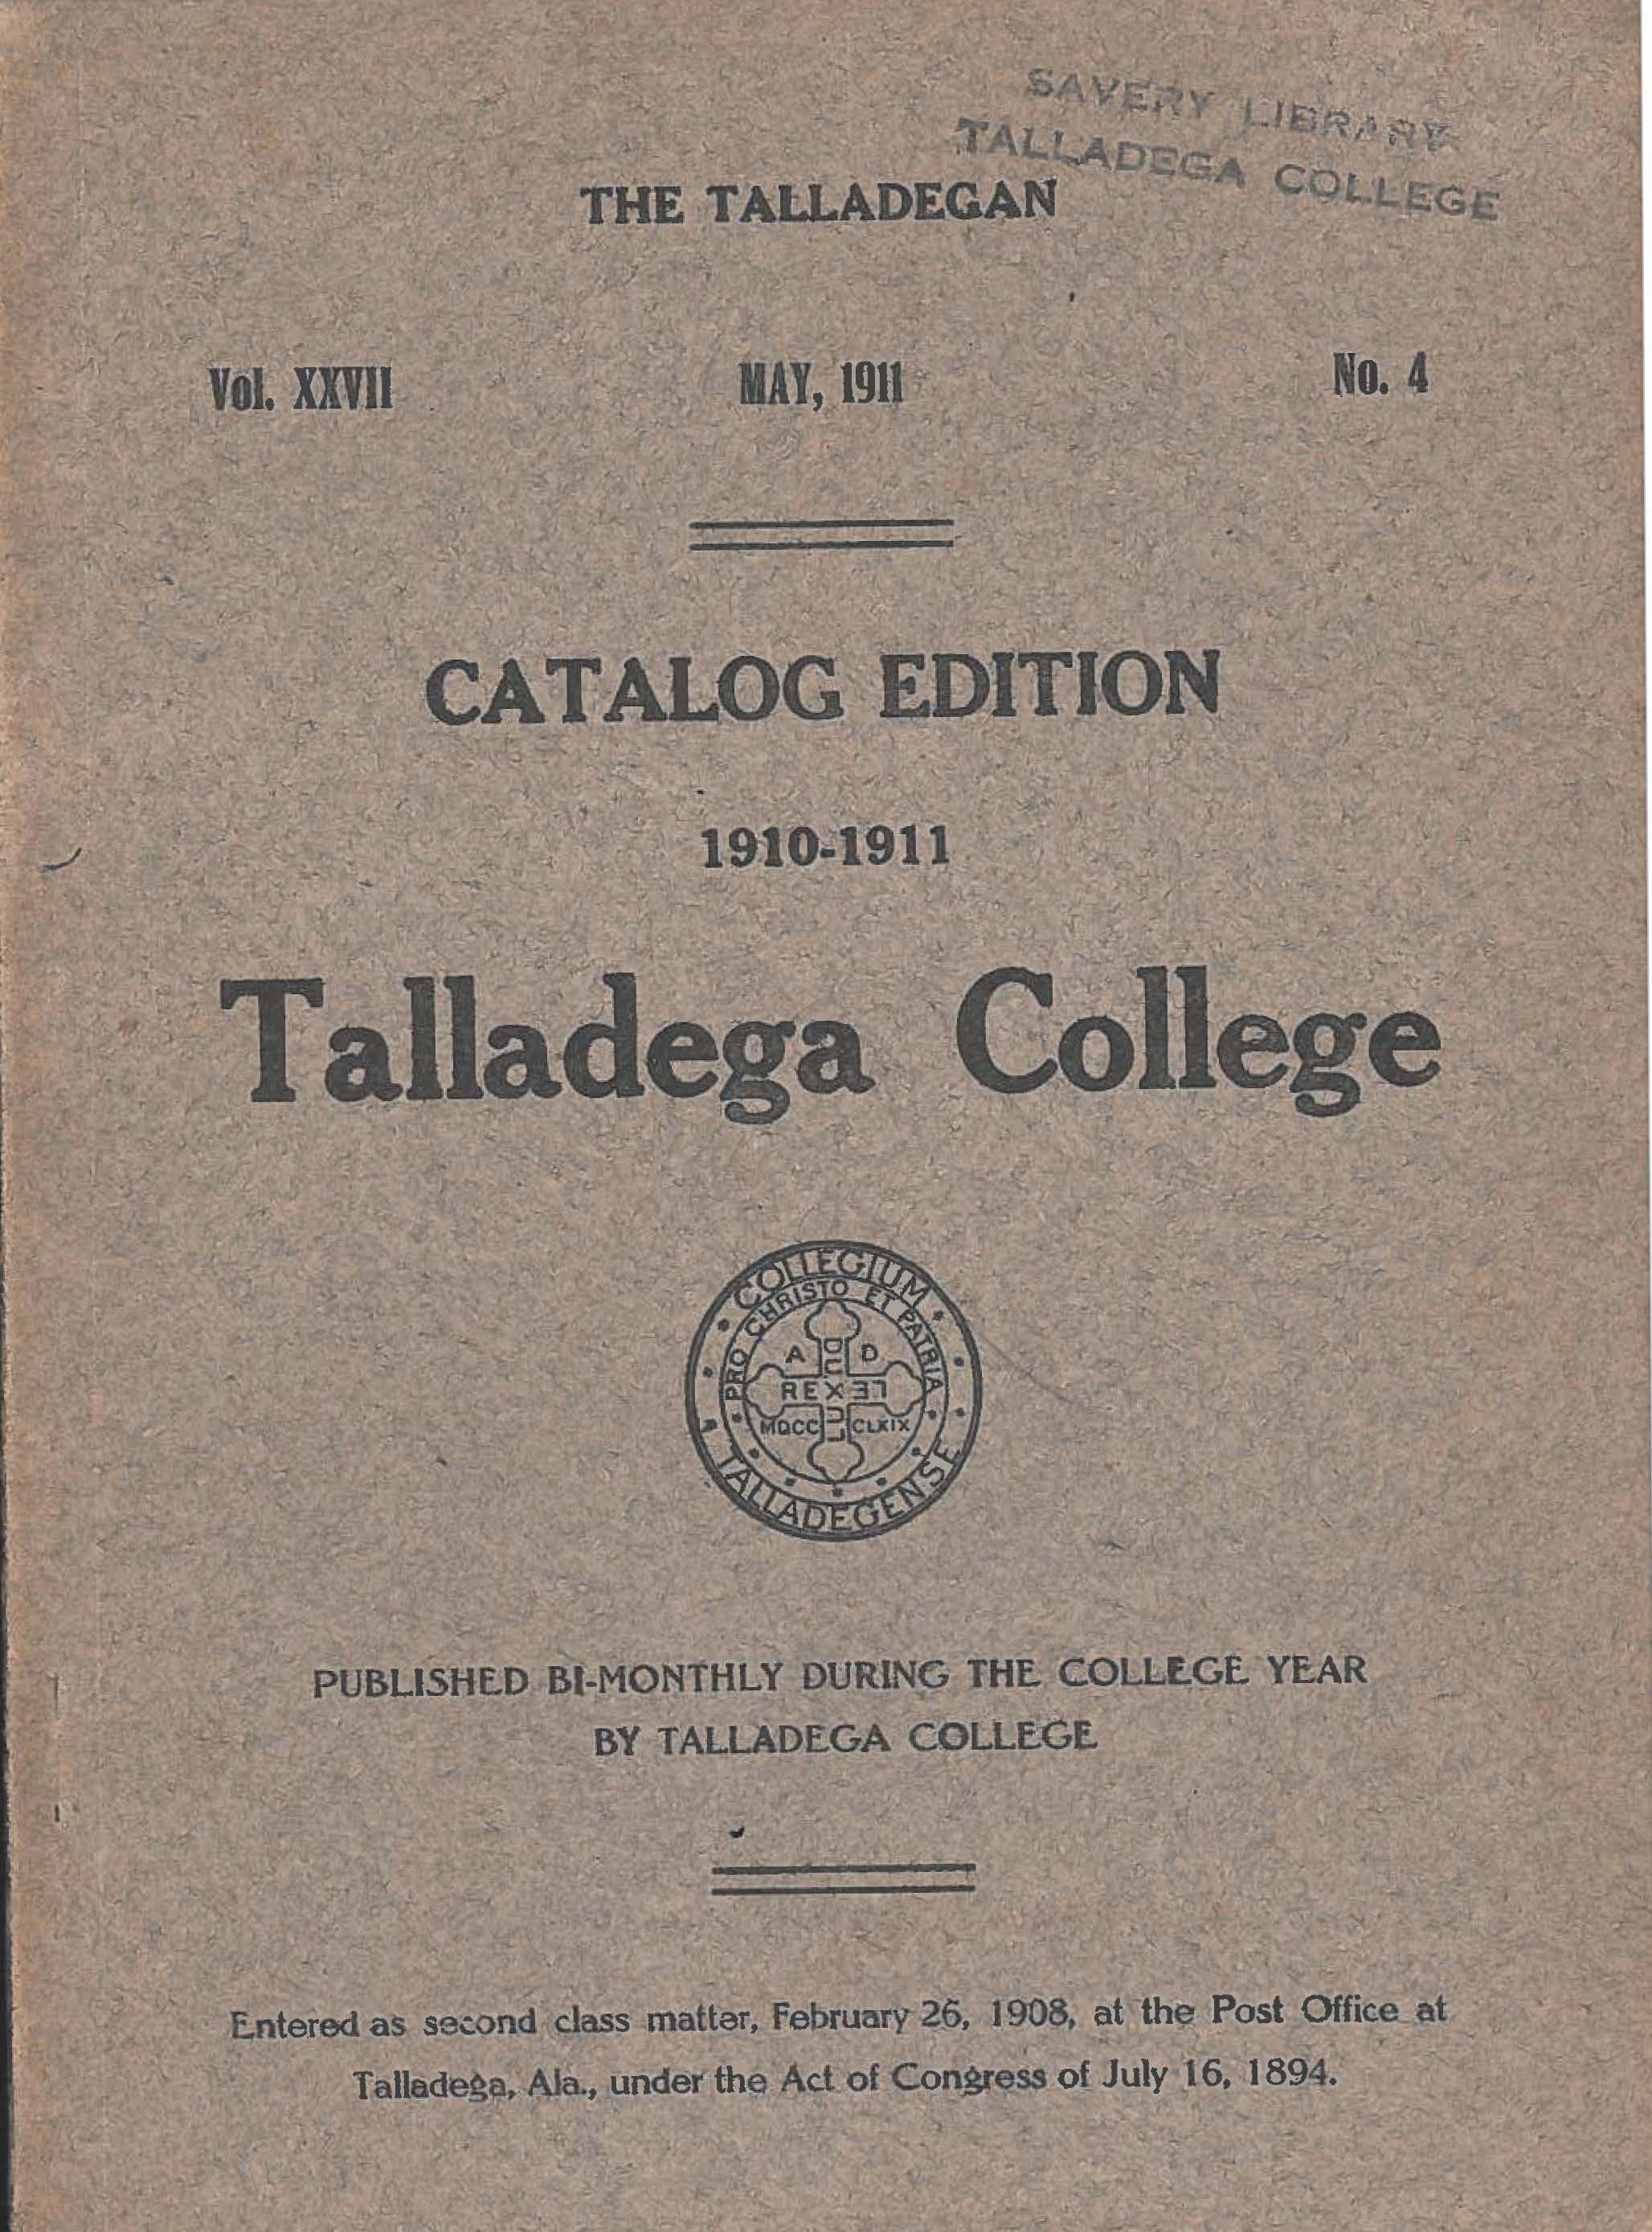 Talladega College Catalog 1909-1910